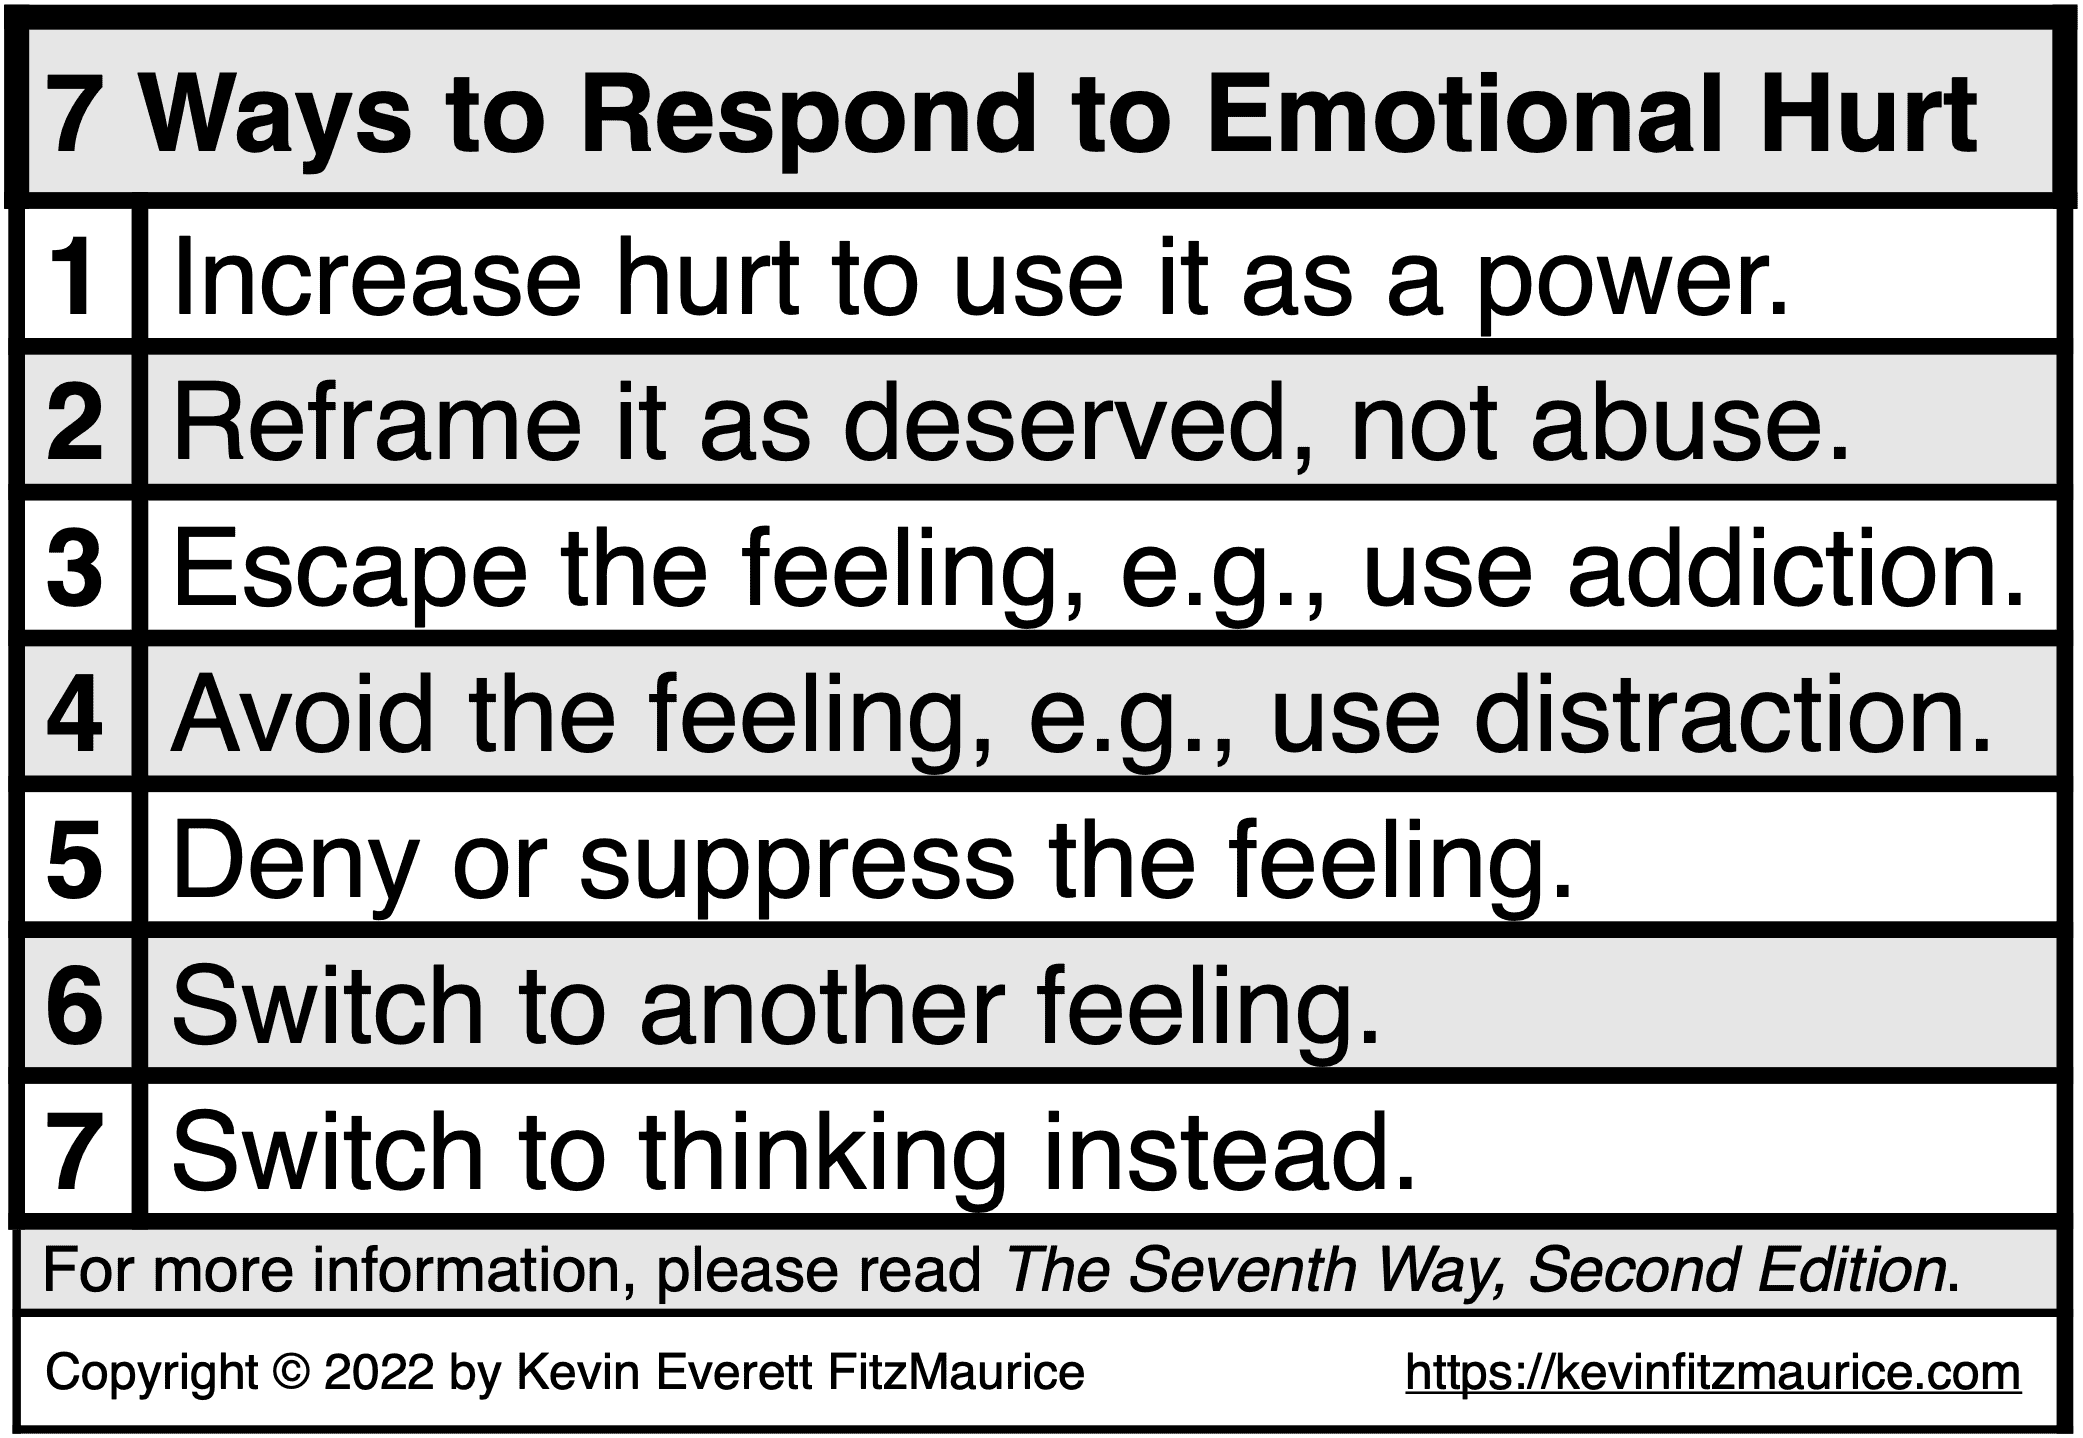 7 Ways to Respond to Emotional Hurt